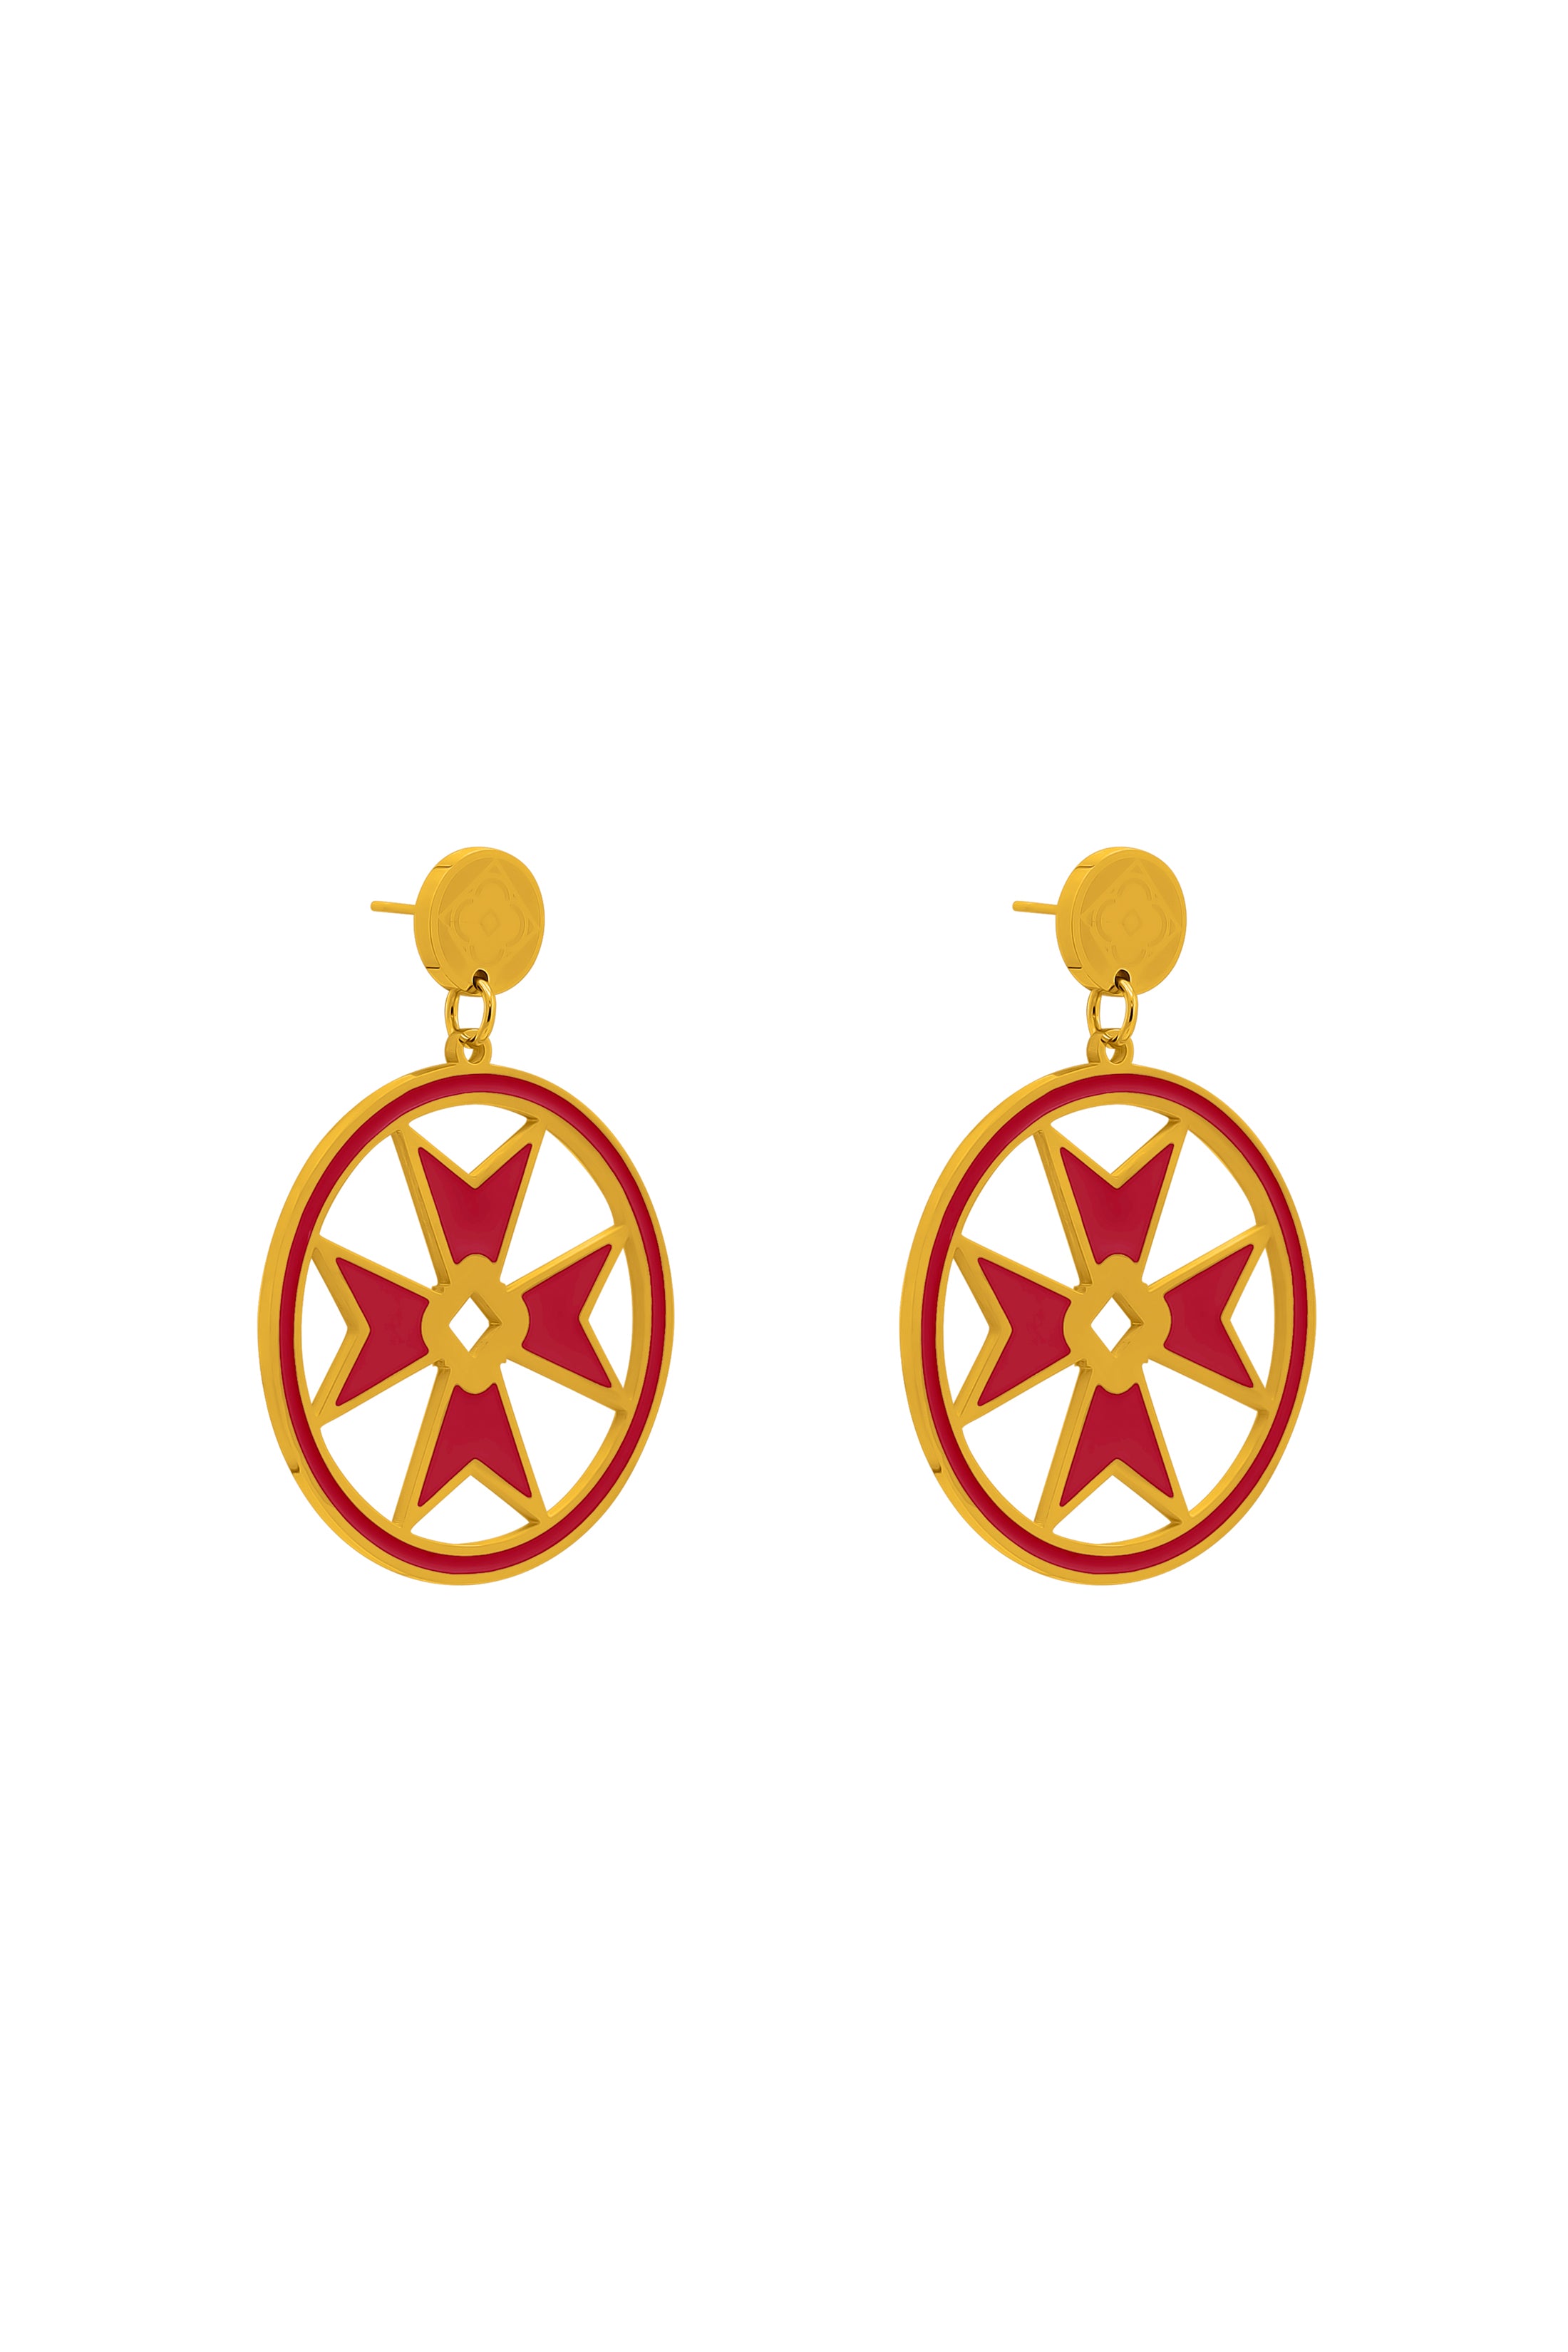 Catriona’s Medium Maltese Cross Hoop Earring Set in Red Enamel